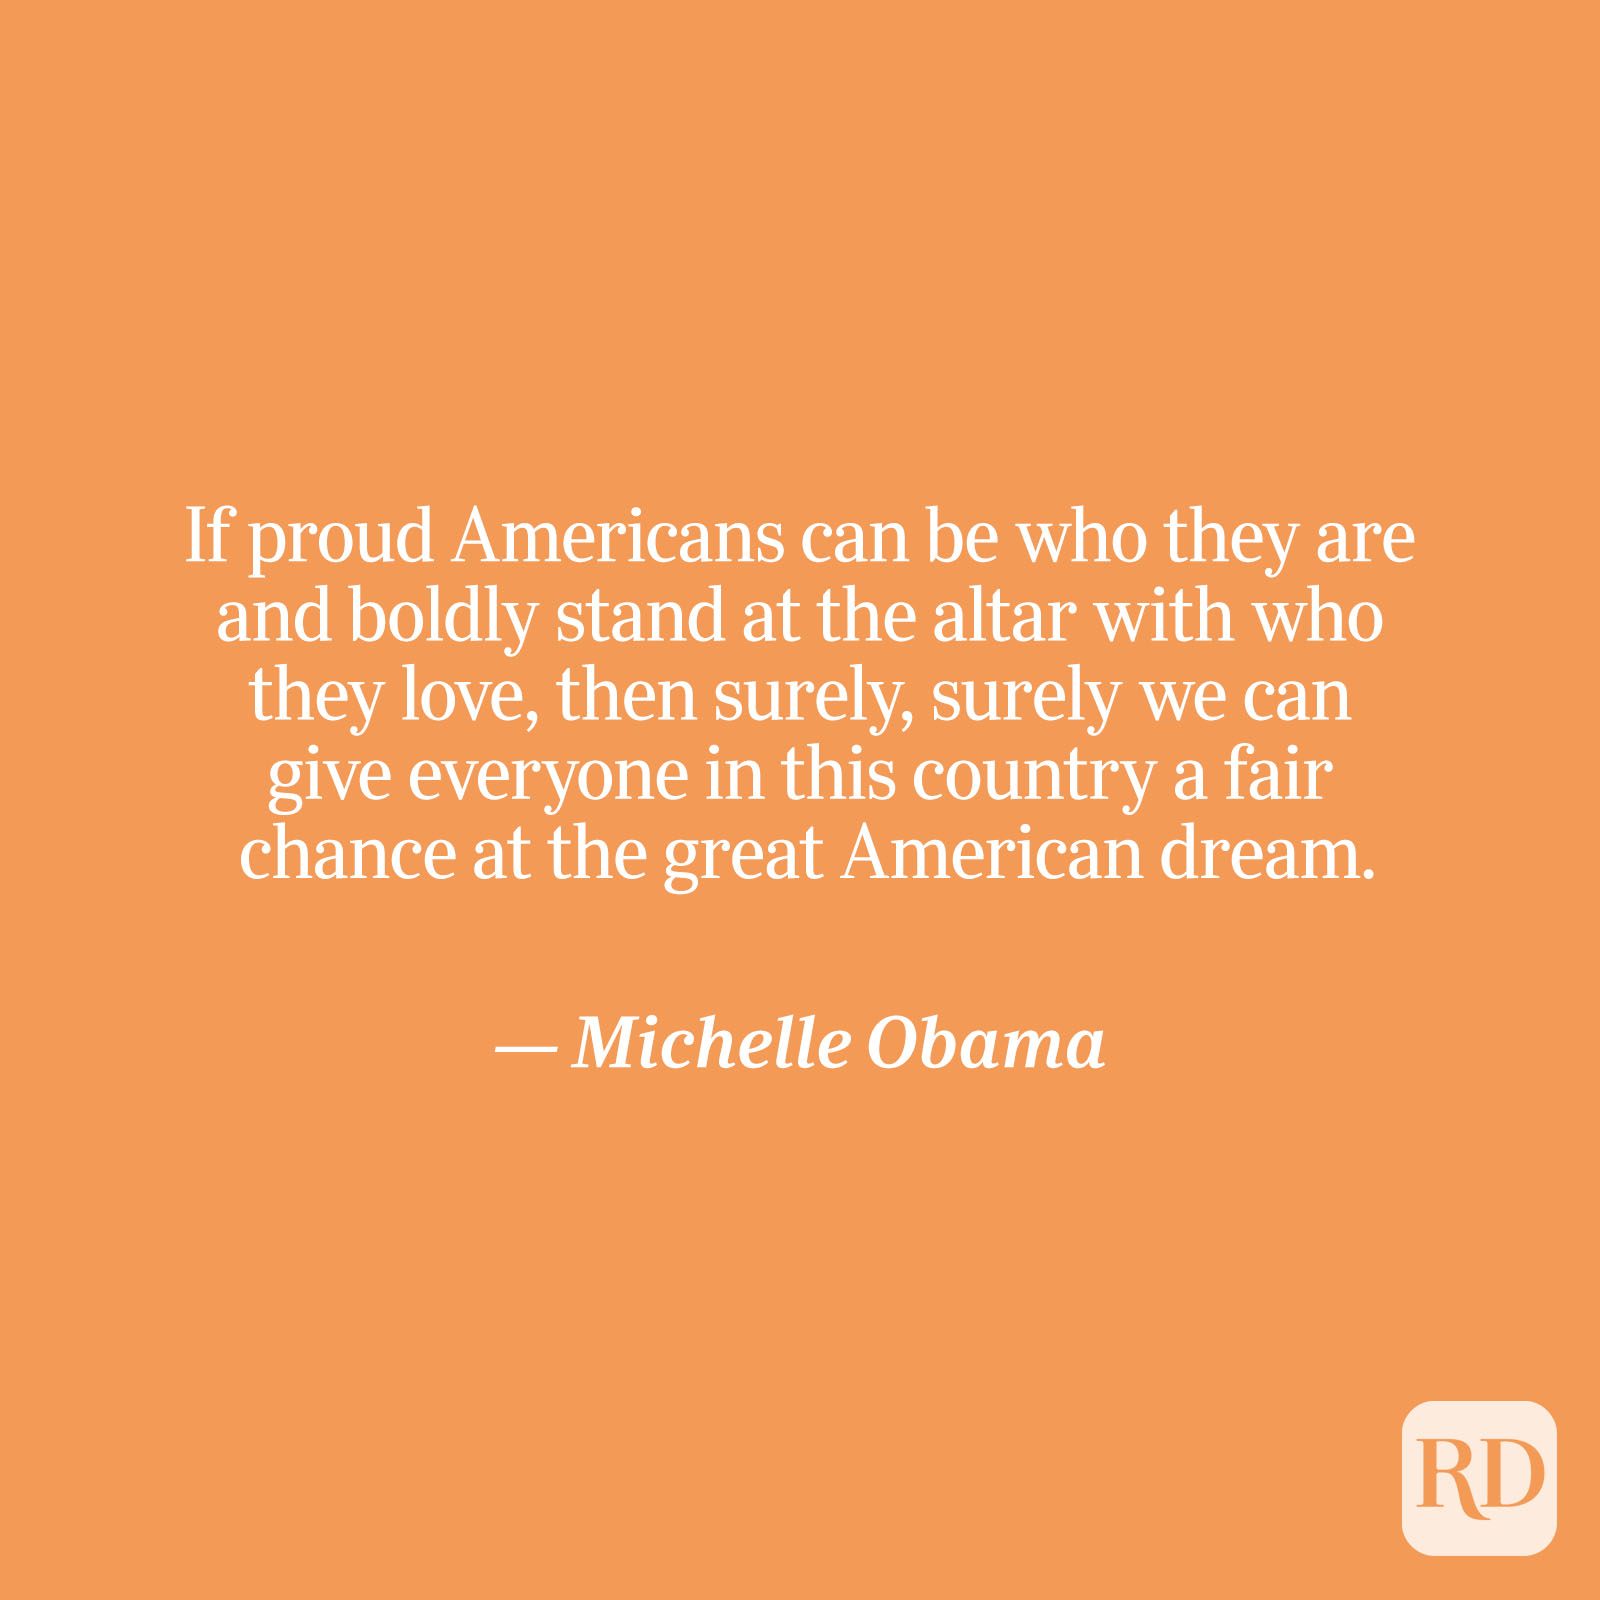 Obama quote on orange